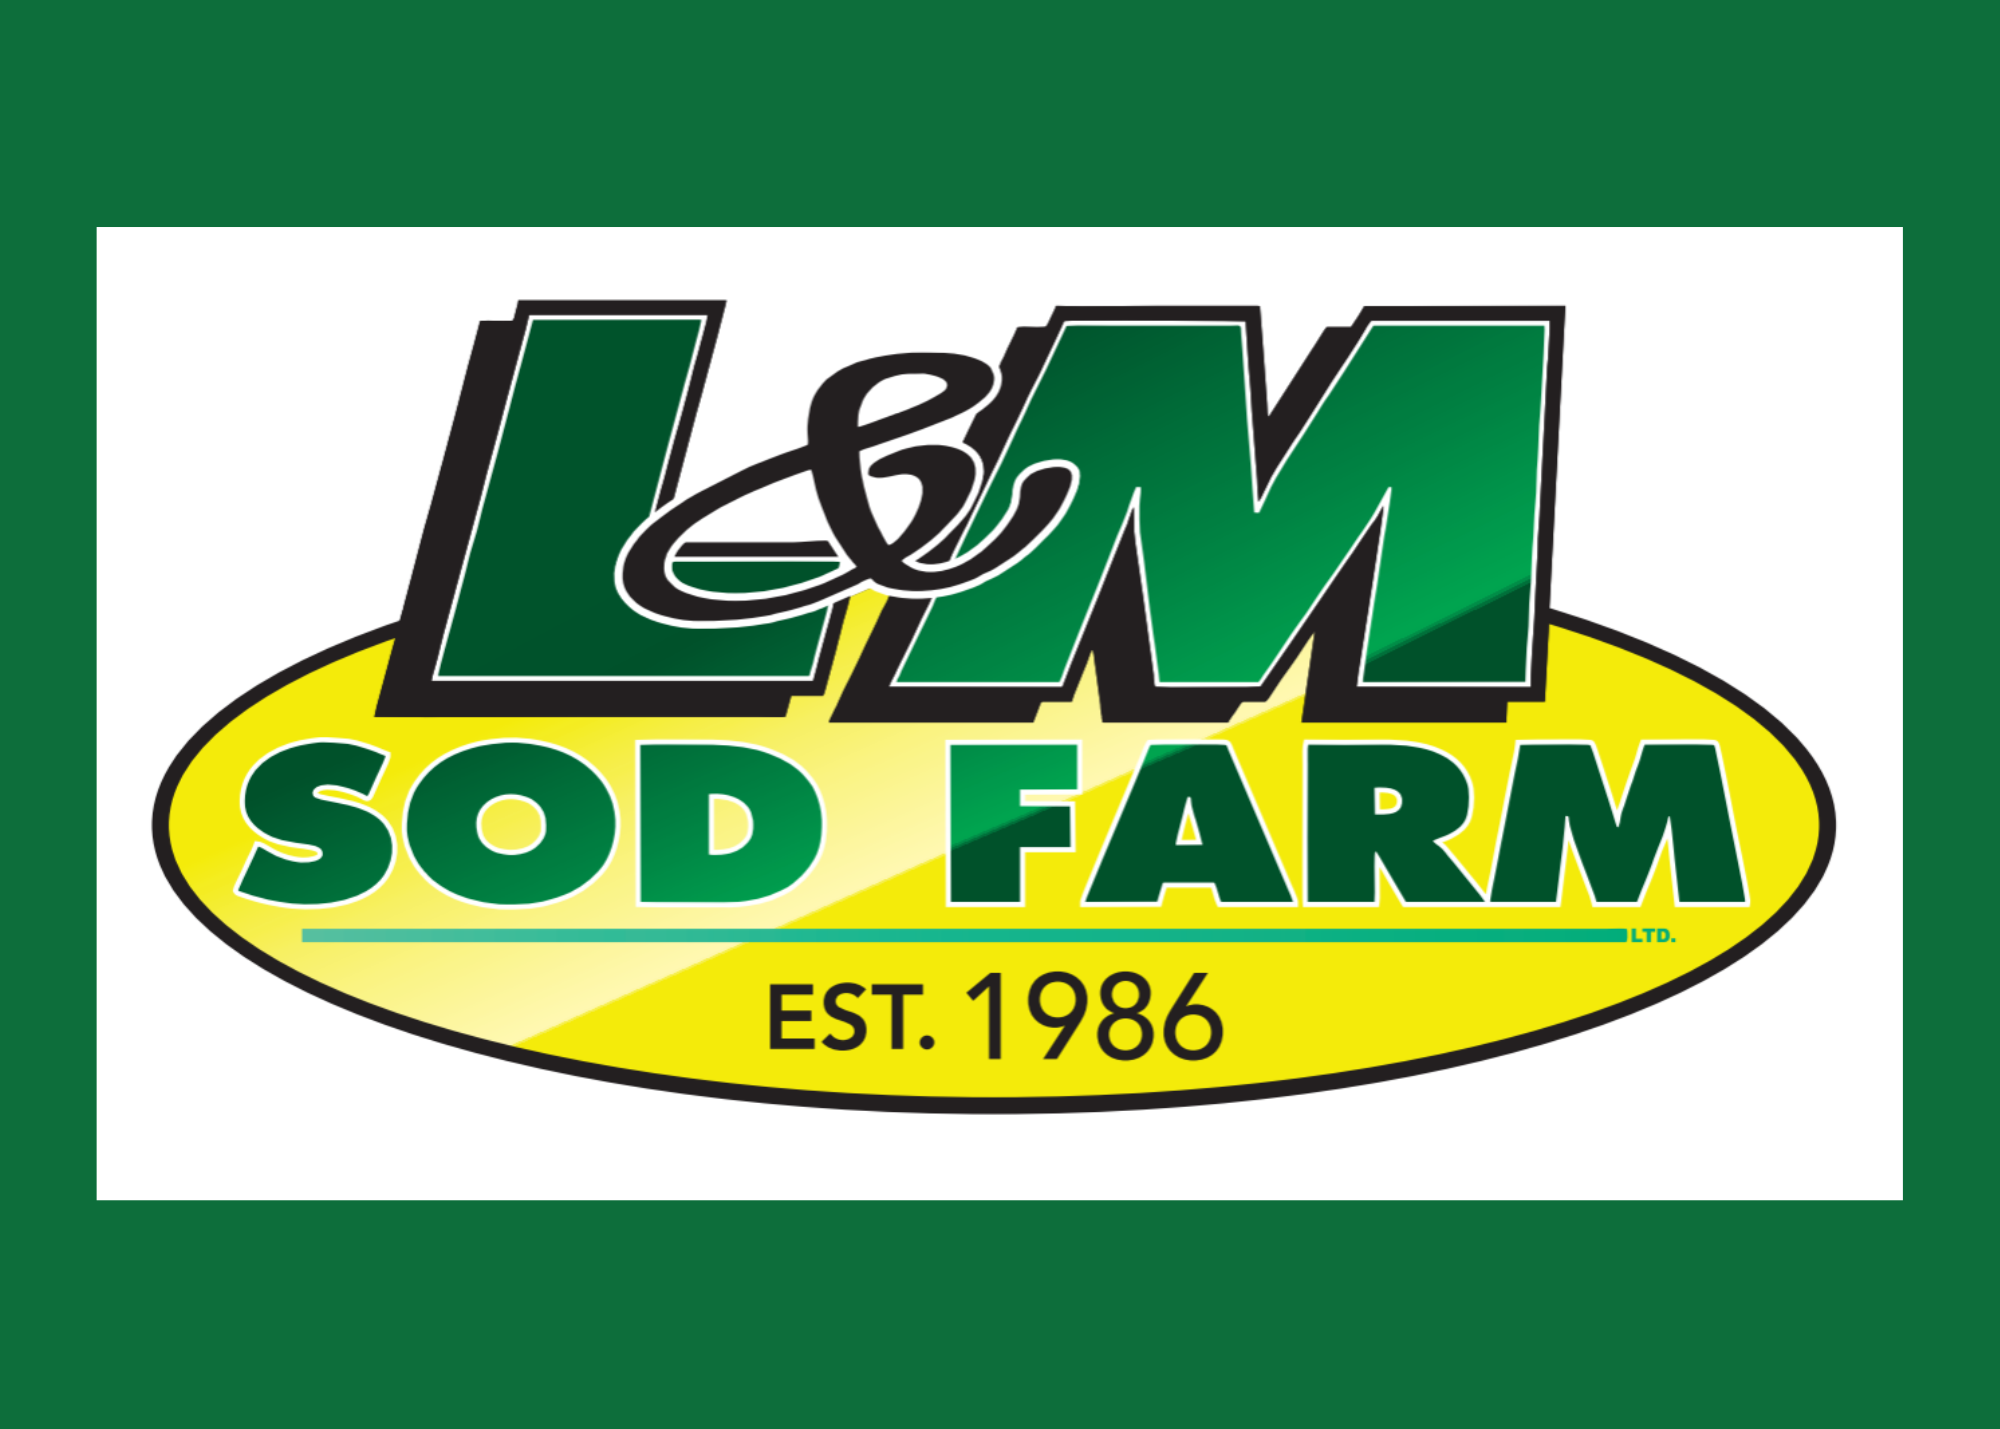 L&M sod farm logo